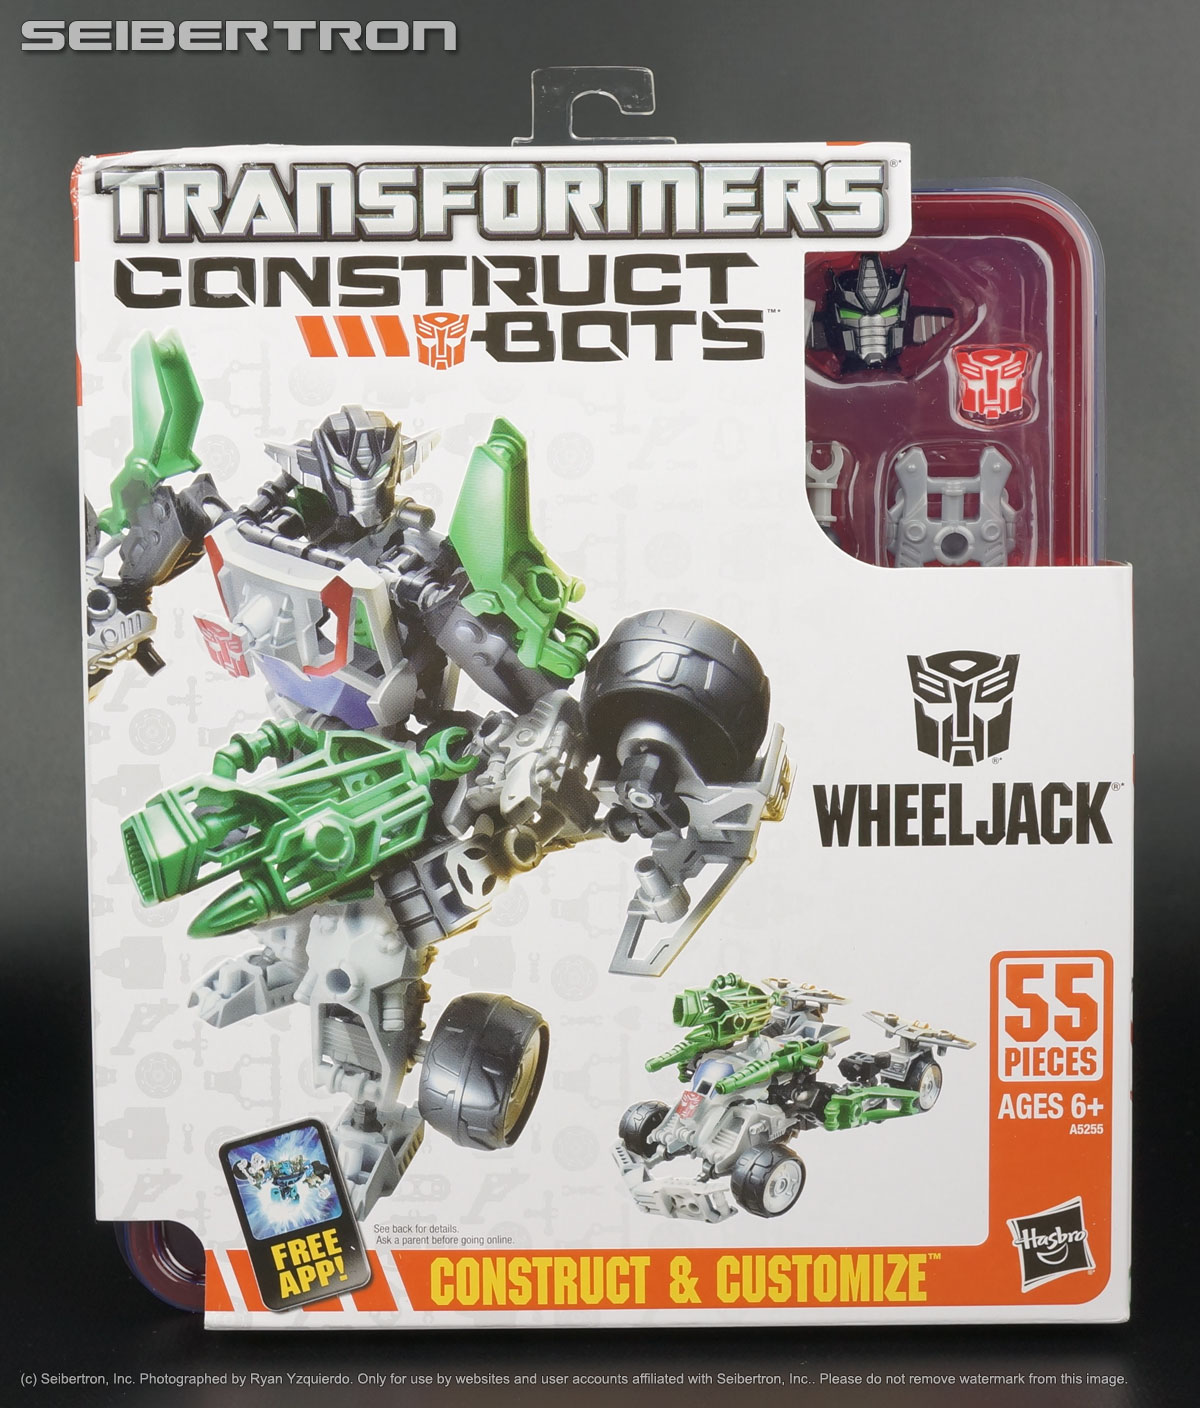 Construct-Bots WHEELJACK Elite Class Transformers E1:01 G1 Hasbro New 2013